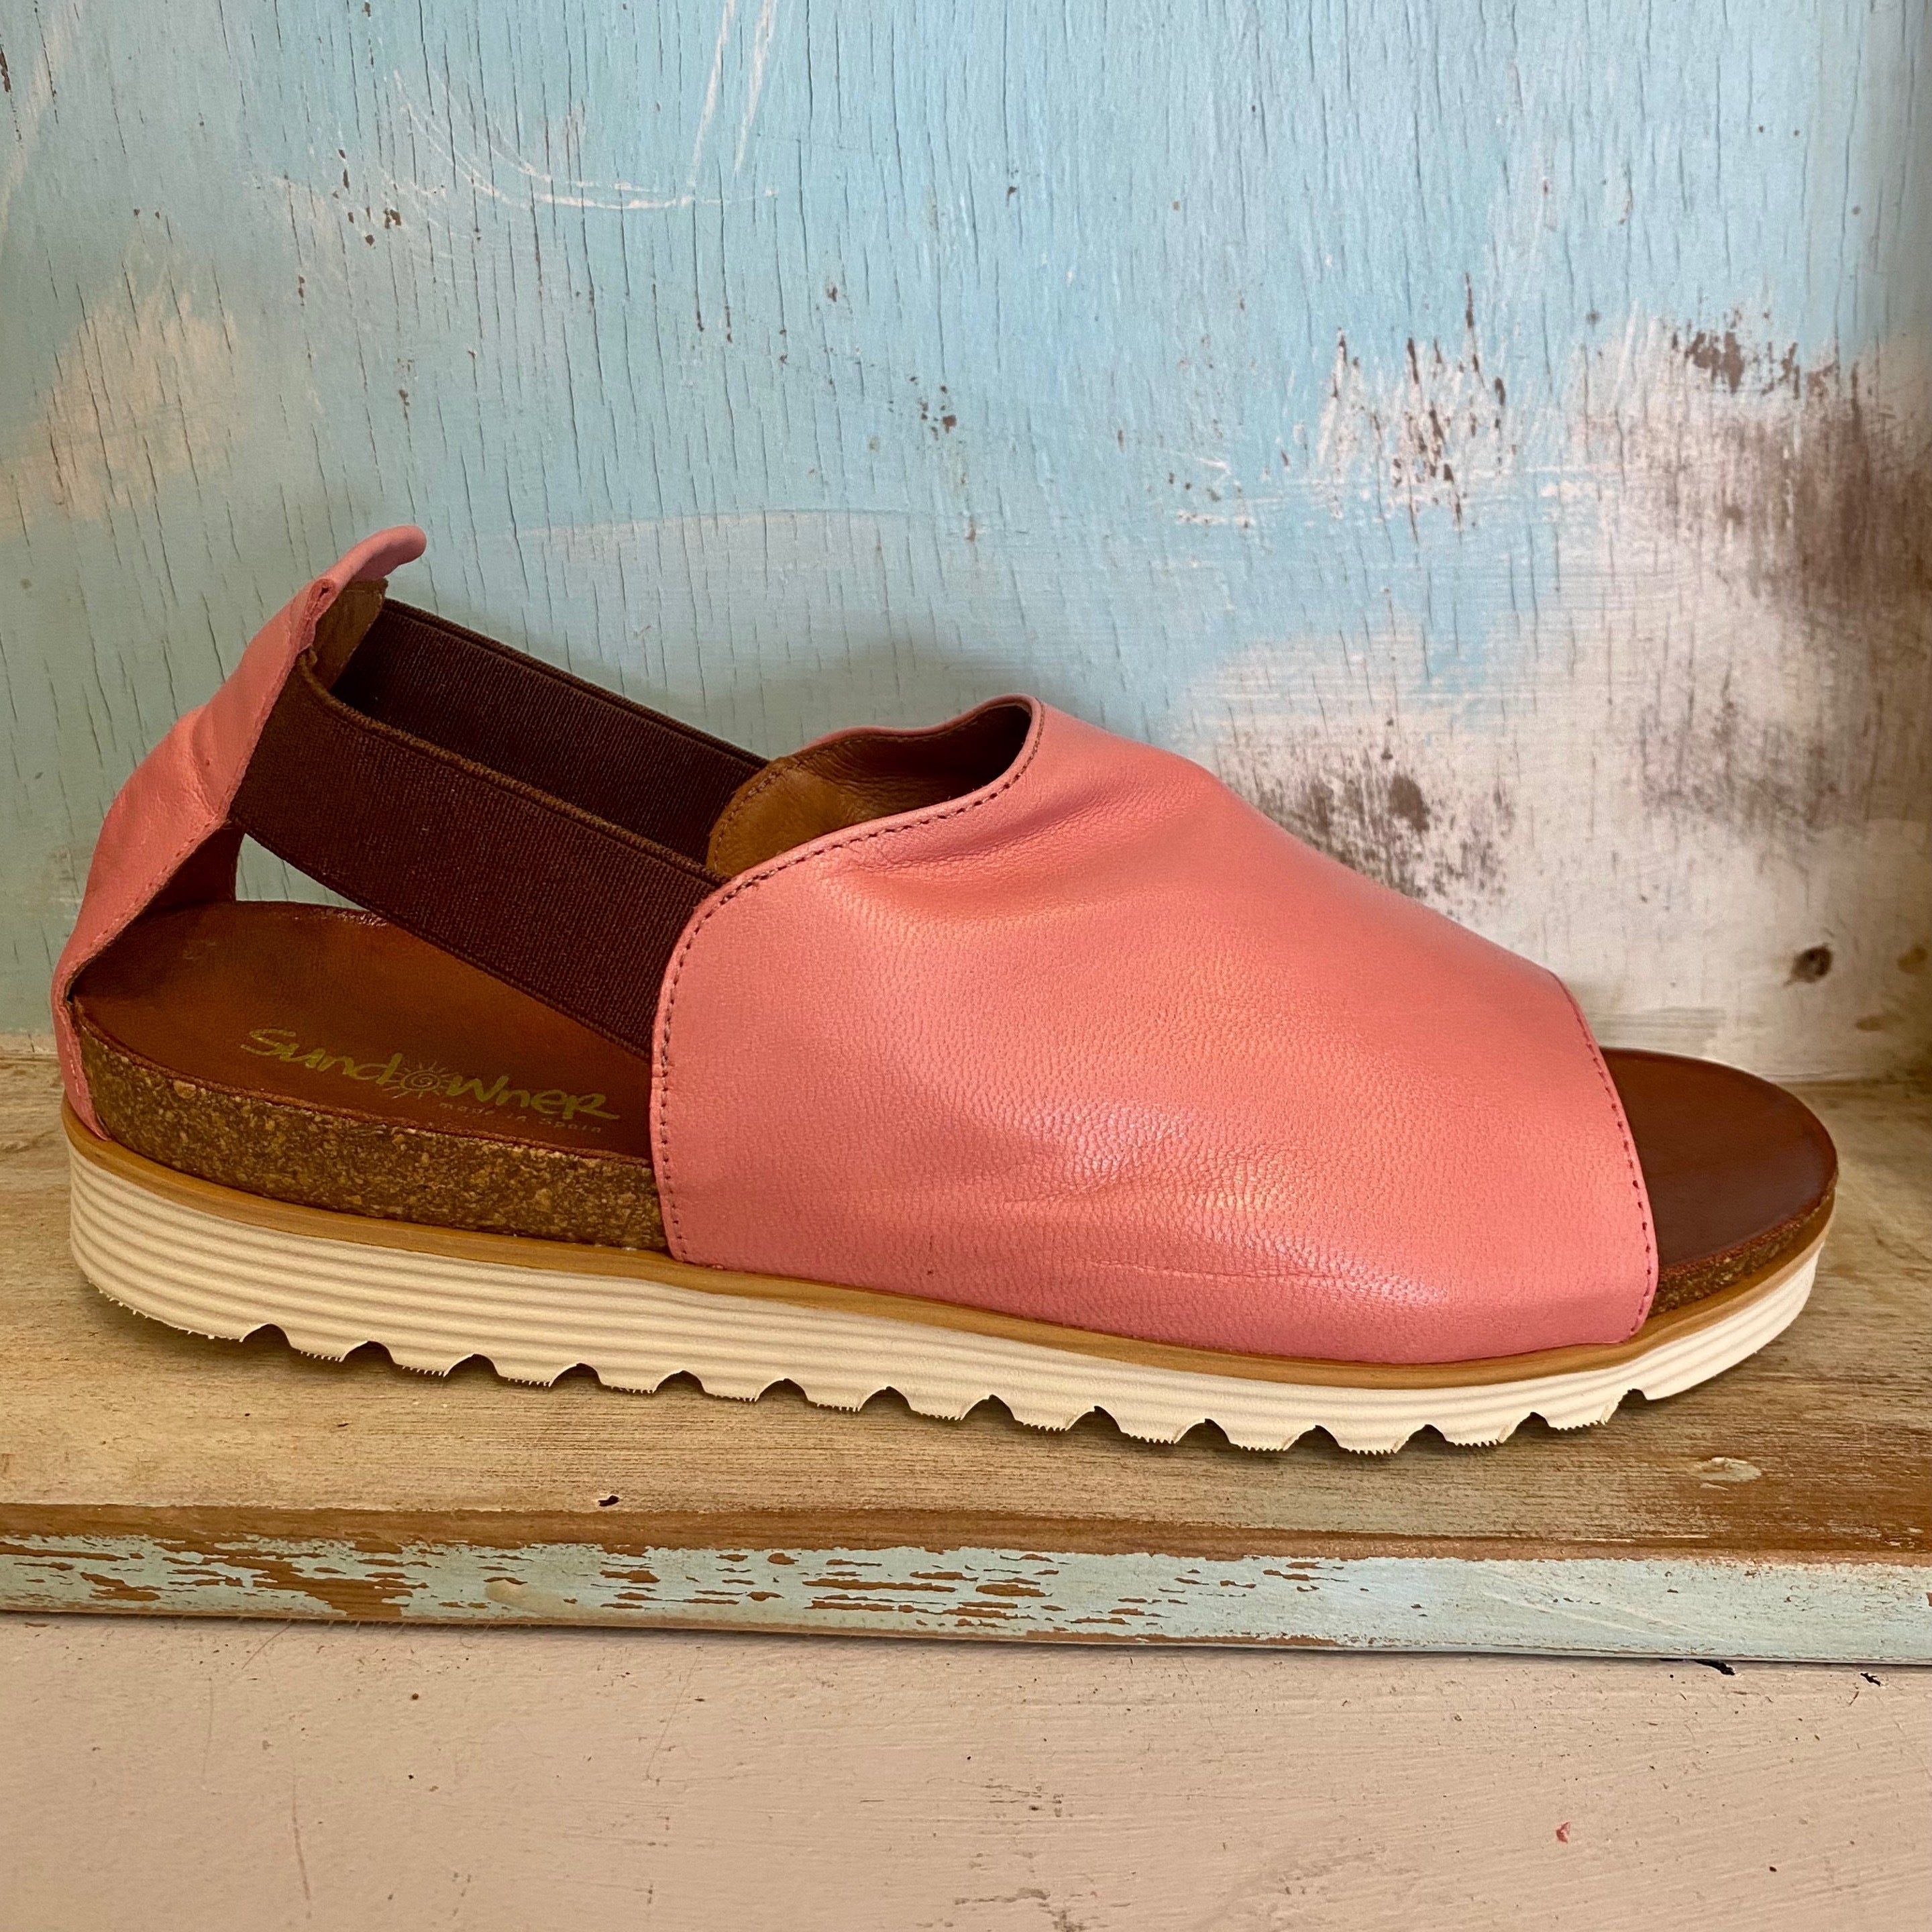 Egipcias Cocoa brown leather sandals online - Women sandals online